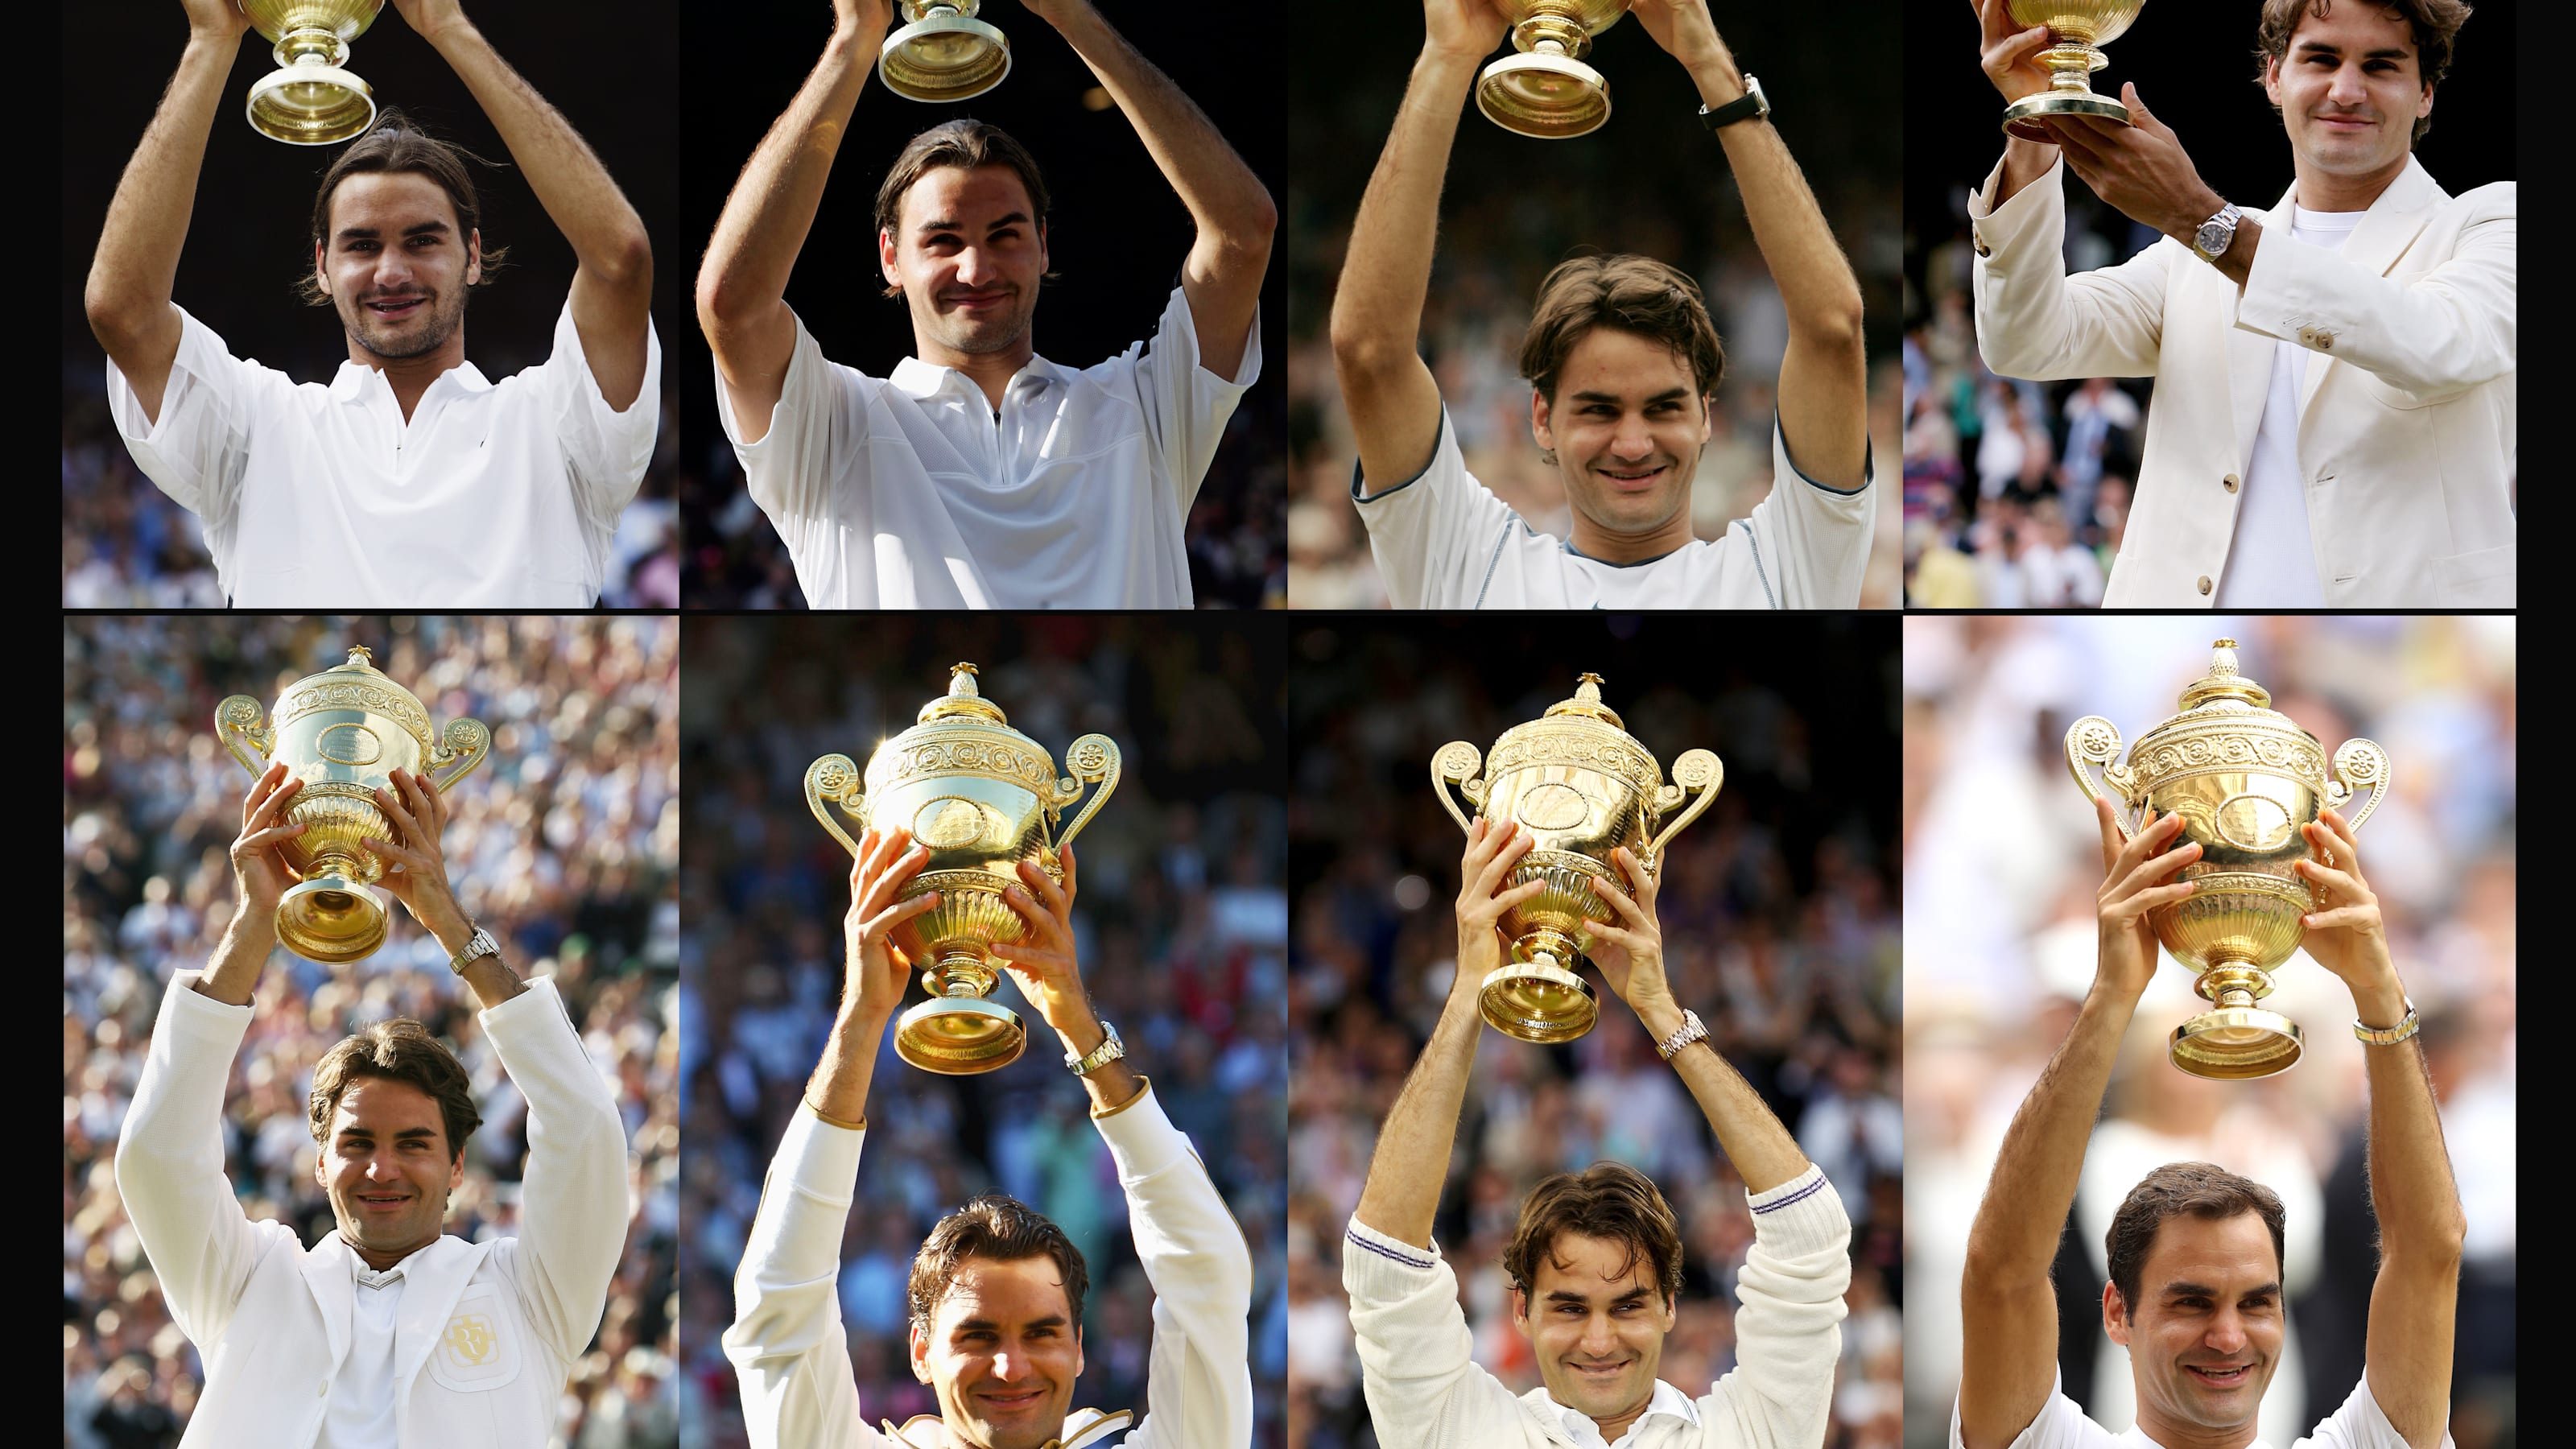 How Many Wimbledon Titles Has Roger Federer Won